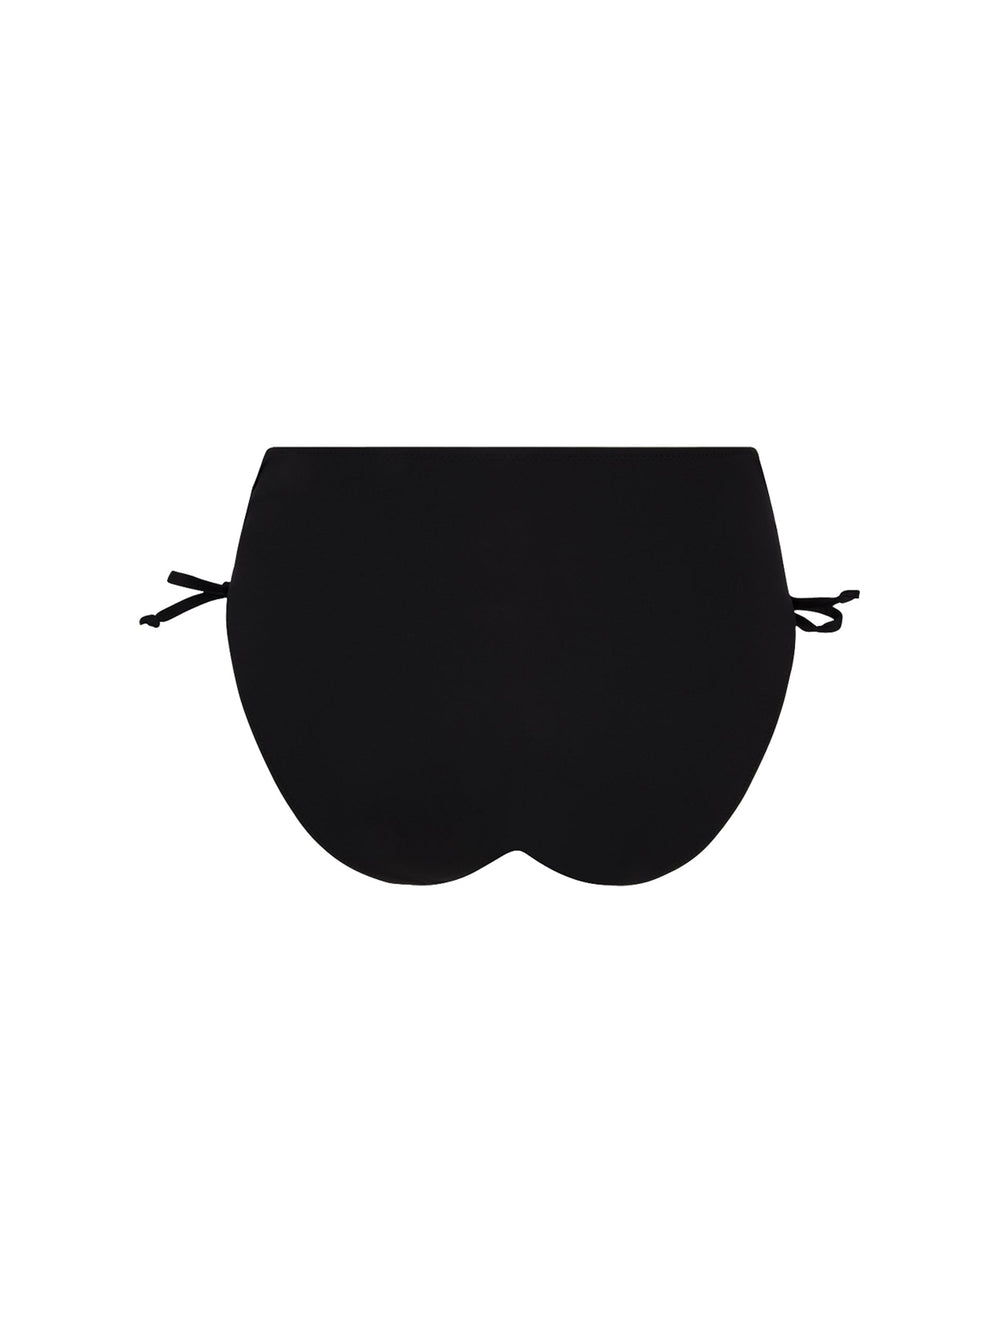 Antigel by Lise Charmel - La Muse Dolce Vita Classic Side Ties Bikini Bottom Poise Noir Full Bikini Brief Antigel by Lise Charmel Swimwear 